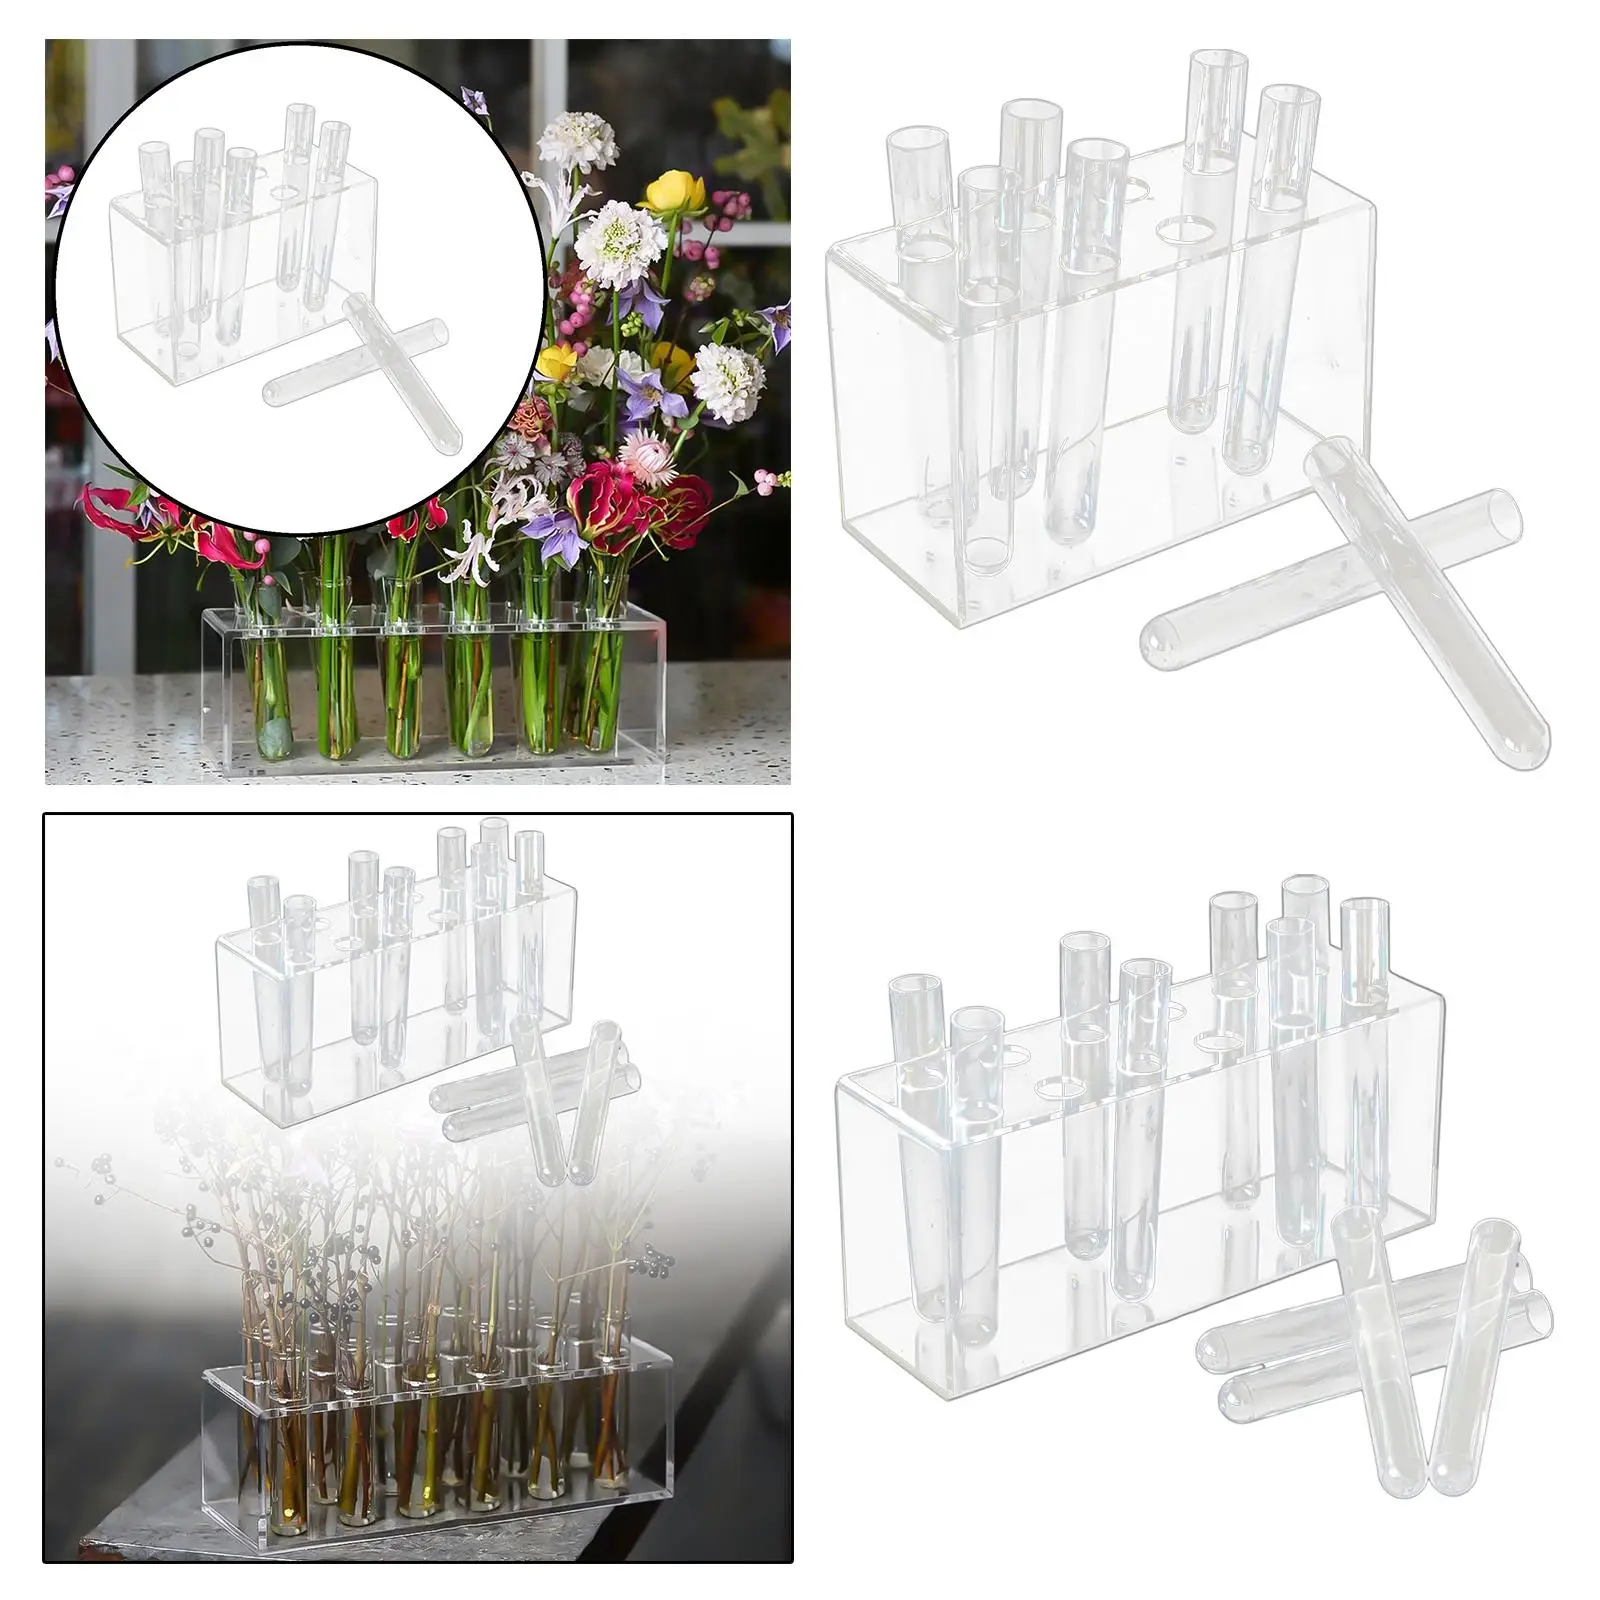 Hydroponic Vase Flower Bud Vase Decorative Acrylic Test Tube Vases Terrarium Planter for Home Office Centerpieces Propagating